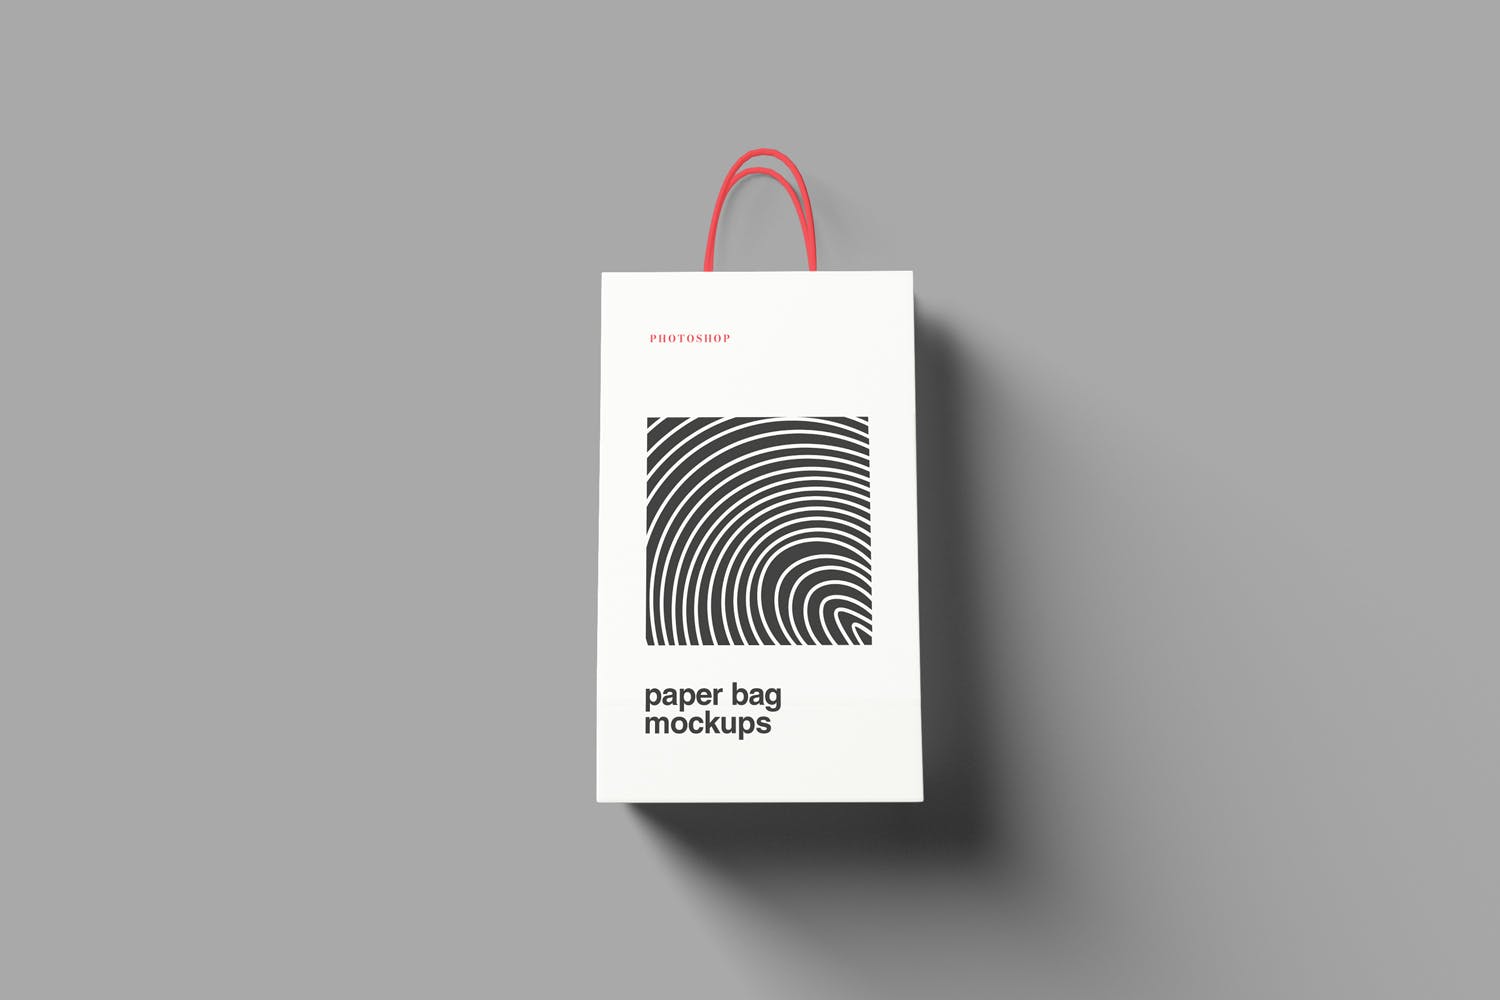 精品购物纸袋设计效果图样机 Paper Bag Mockups插图(2)